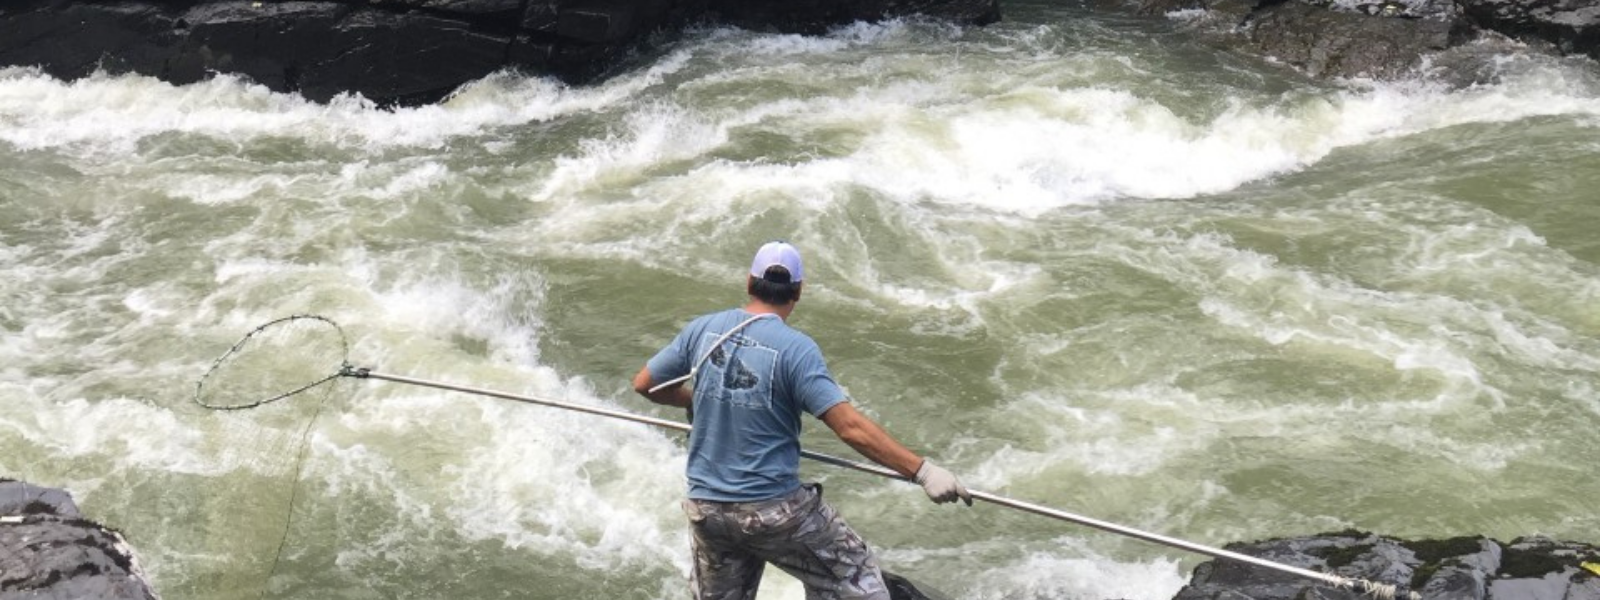 Cliff Wale fishing for sockeye in Gitxsan territory, using a traditional dip net.